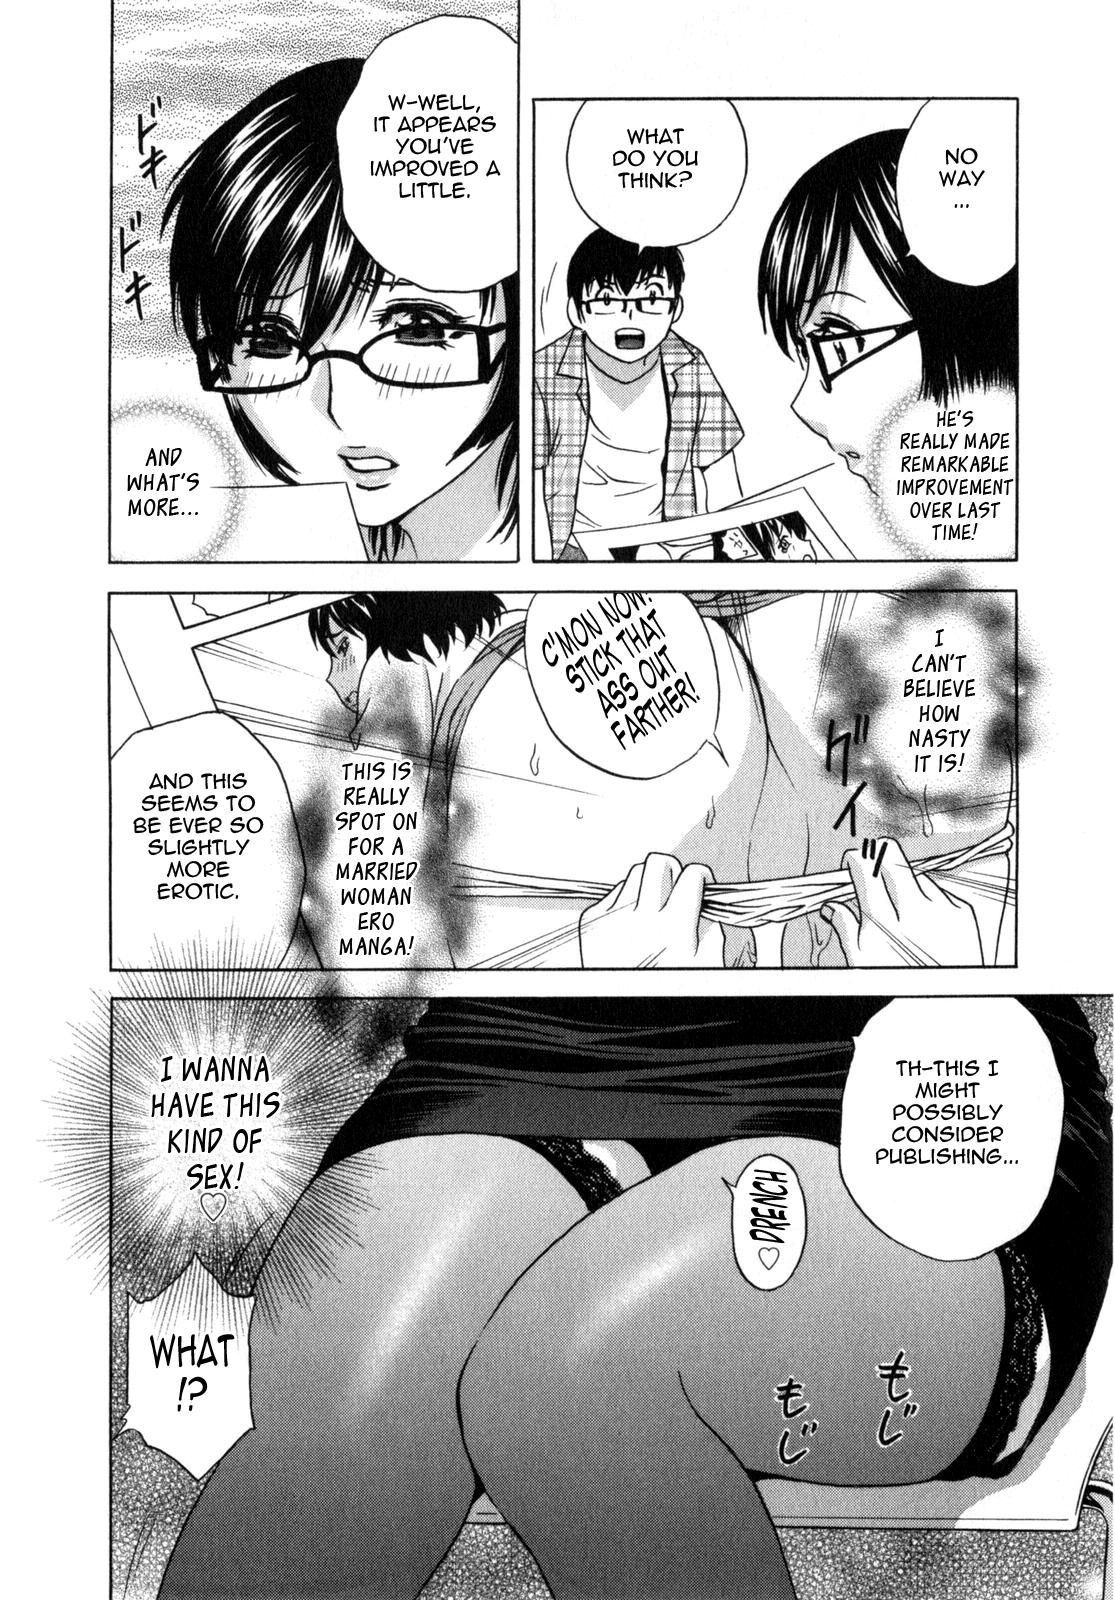 [Hidemaru] Life with Married Women Just Like a Manga 1 - Ch. 1-7 [English] {Tadanohito} 109